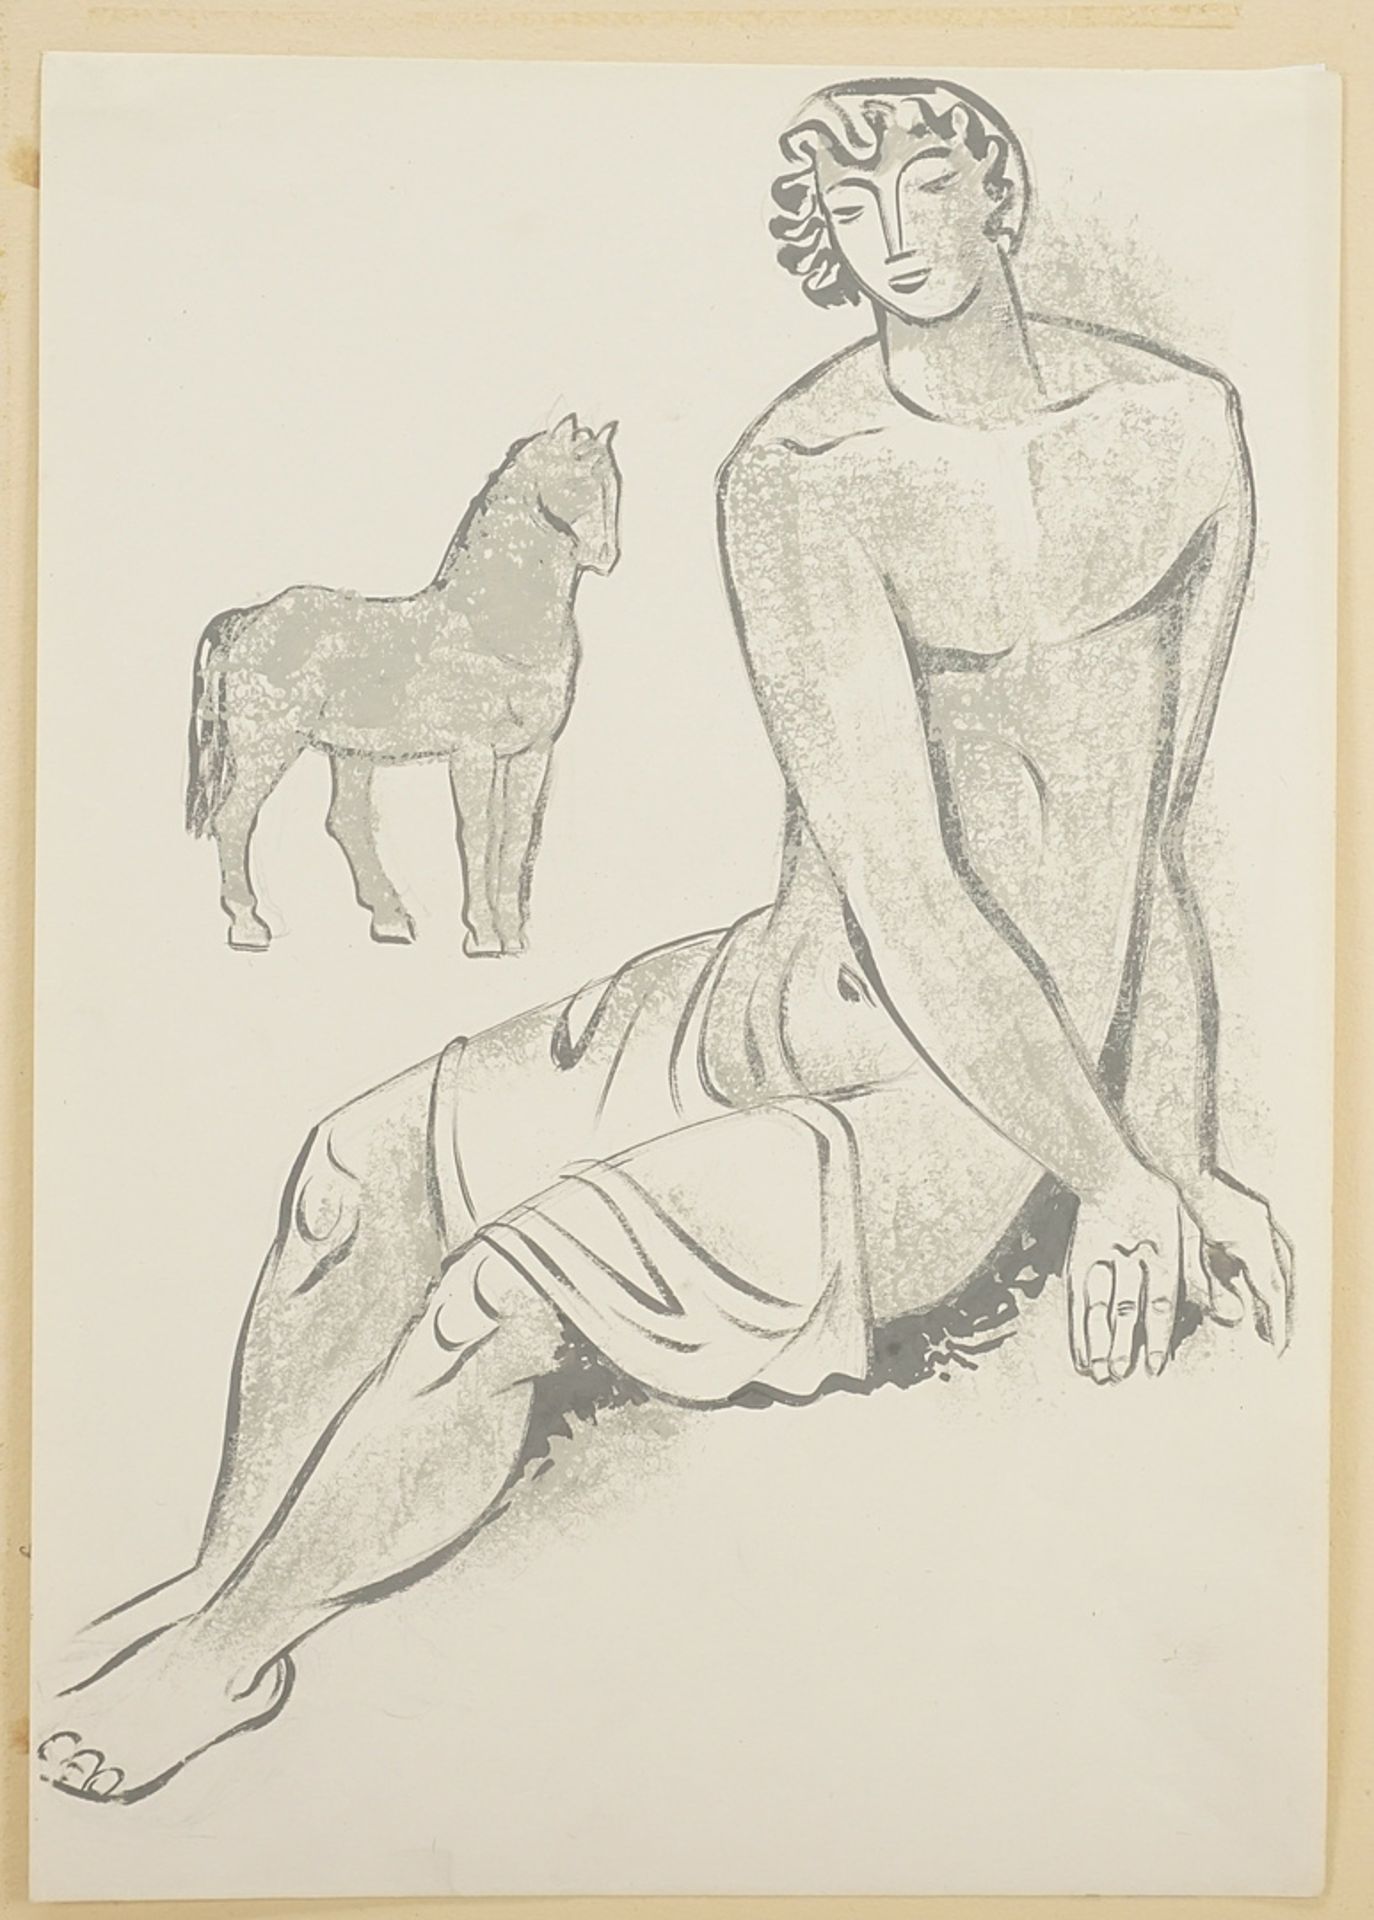 Richard Schwarzkopf, "Jüngling mit Pferd" - Image 3 of 4